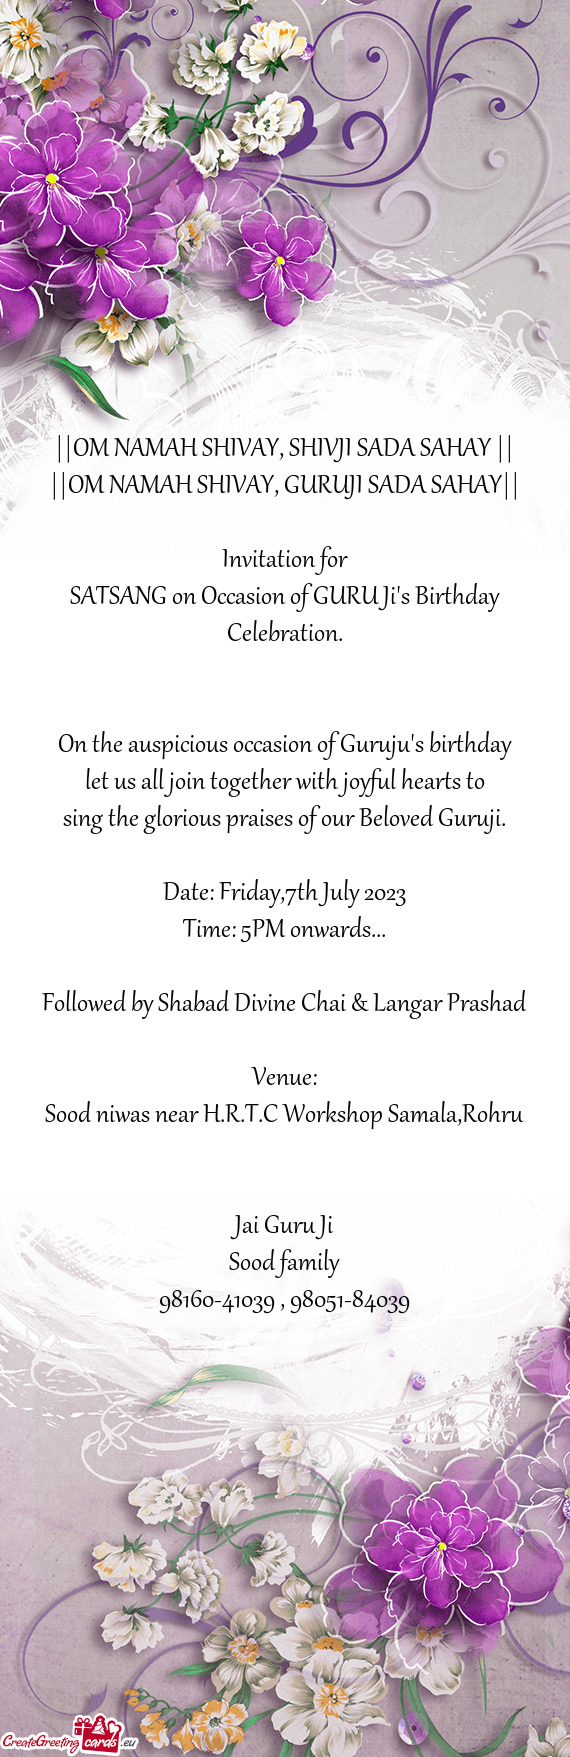 On the auspicious occasion of Guruju's birthday